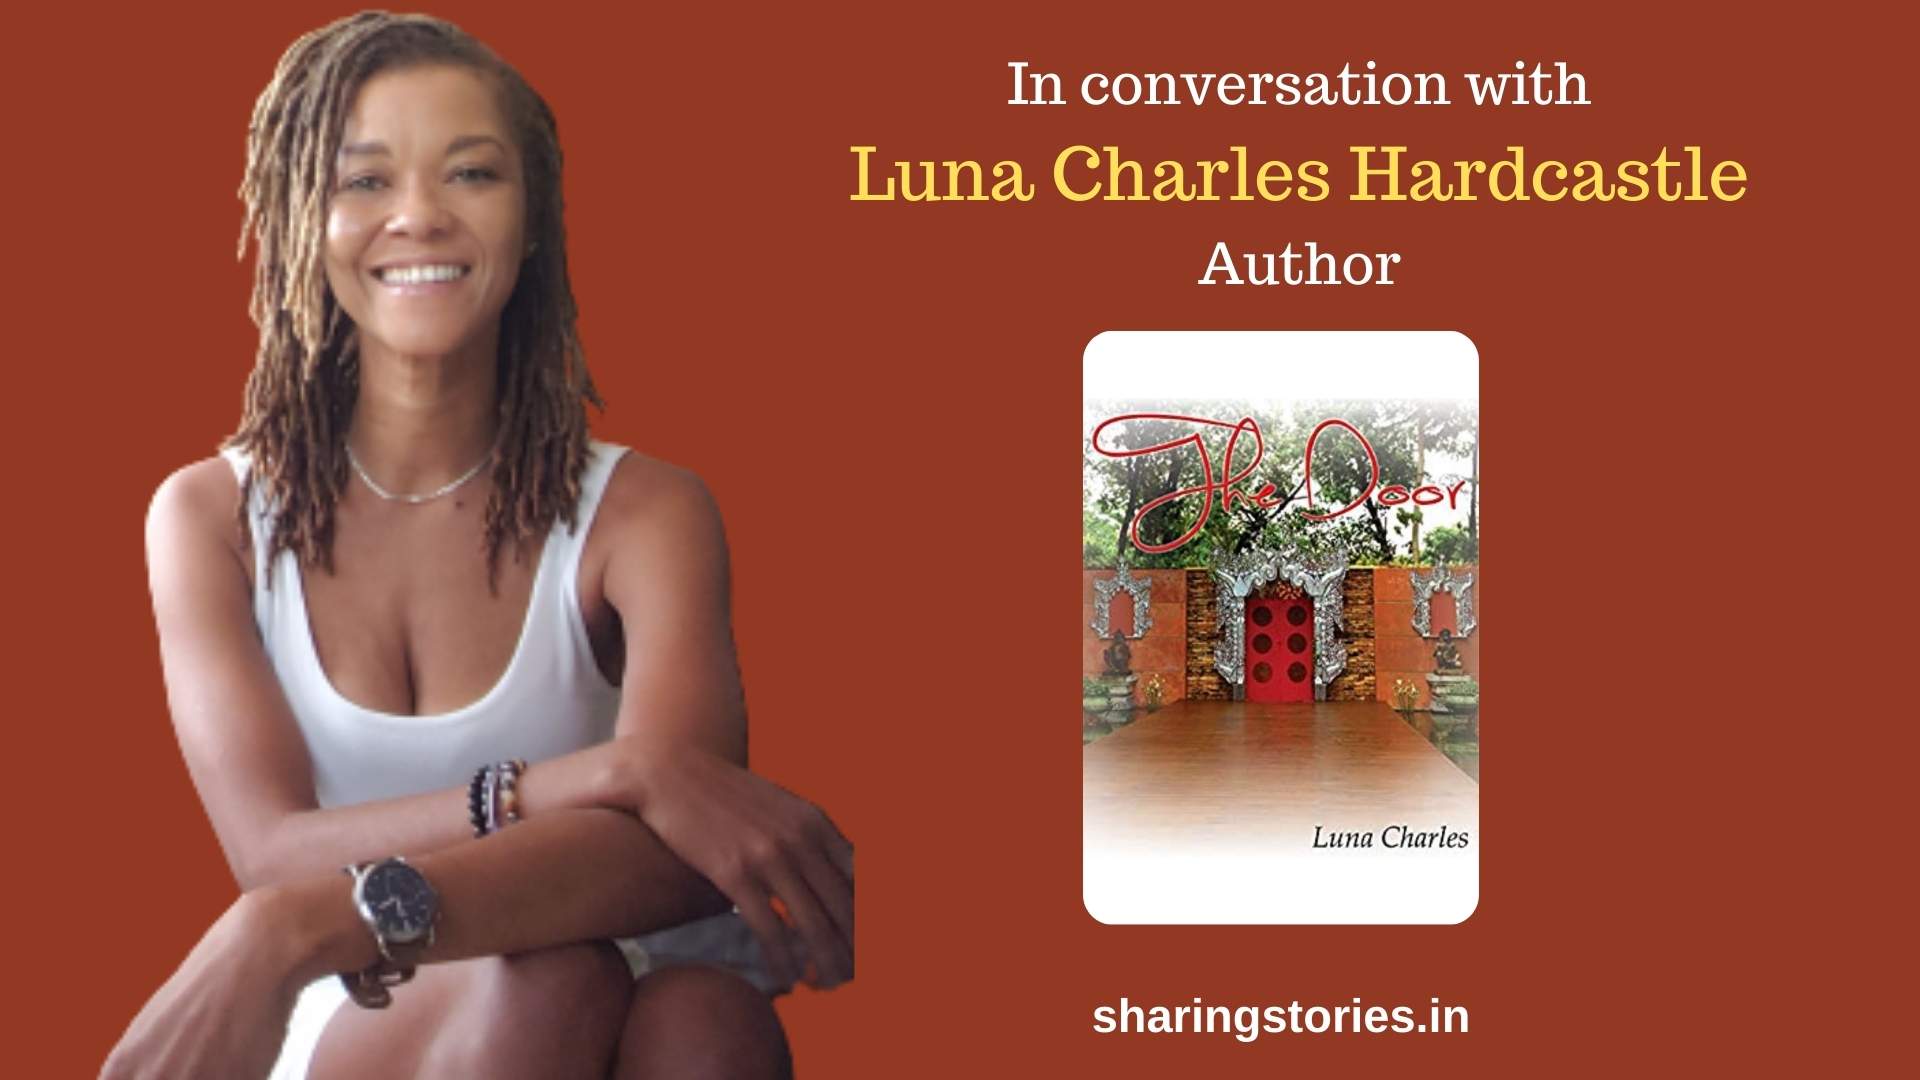 Author Luna Charles Hardcastle